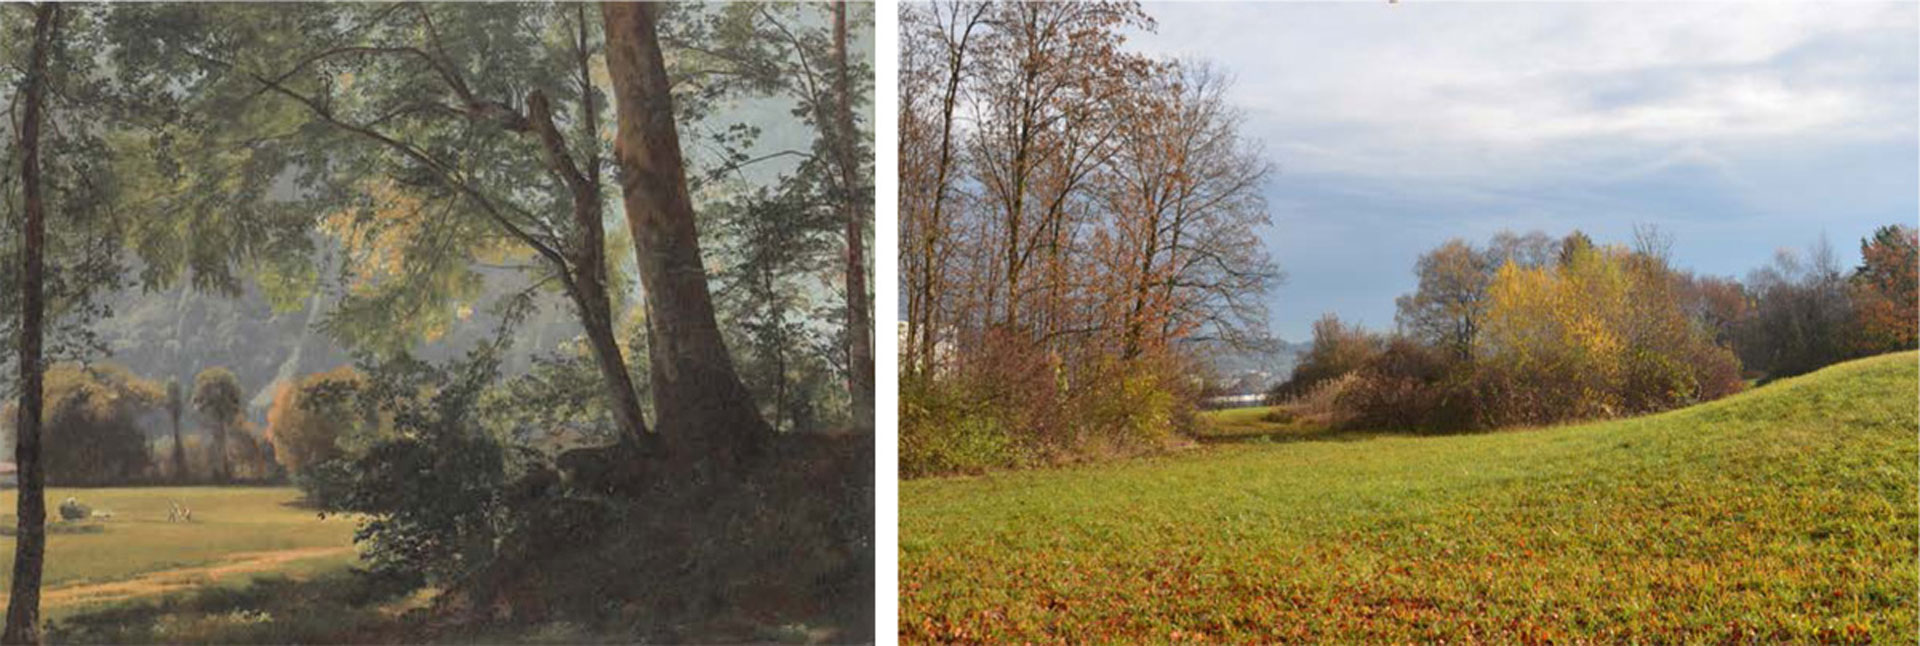 Der Wald + die Lichtung: Johann Gottfried Steffan, "Ausblick aus einem Wald" 1859-05 (links) / Butzenbüel Bestand (rechts)